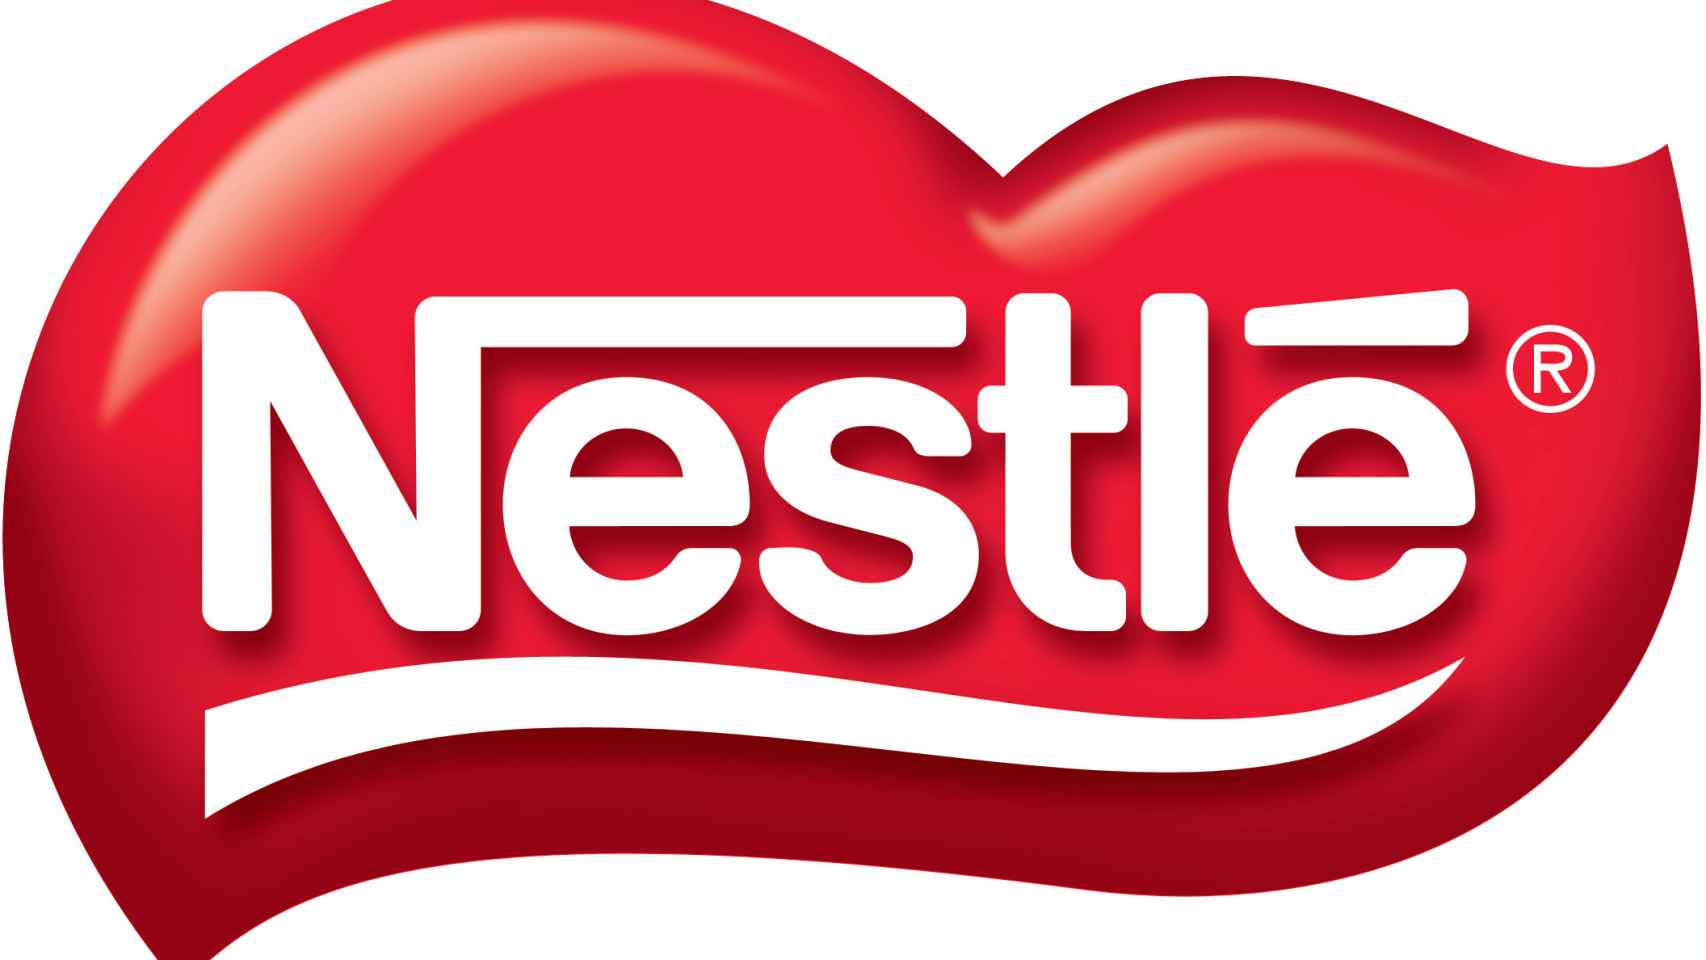 El logo de la marca Nestlé